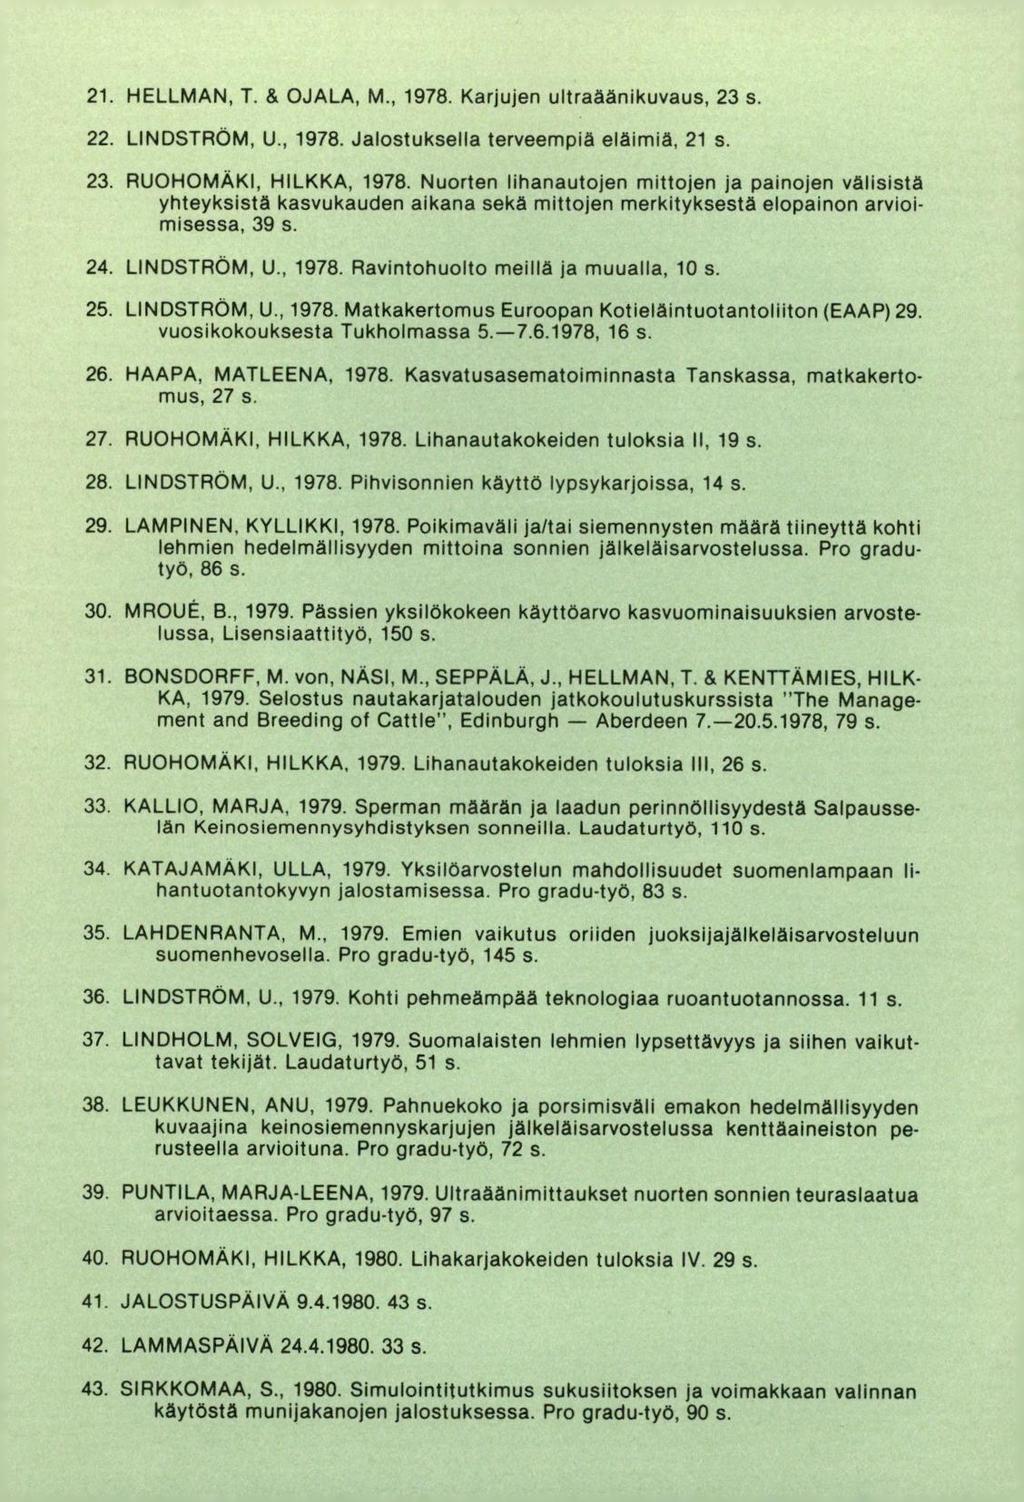 HELLMAN, T. & OJALA, M., 1978. Karjujen ultraäänikuvaus, 23 s. LINDSTRÖM, U., 1978. Jalostuksella terveempiä eläimiä, 21 s. RUOHOMÄKI, HILKKA, 1978.